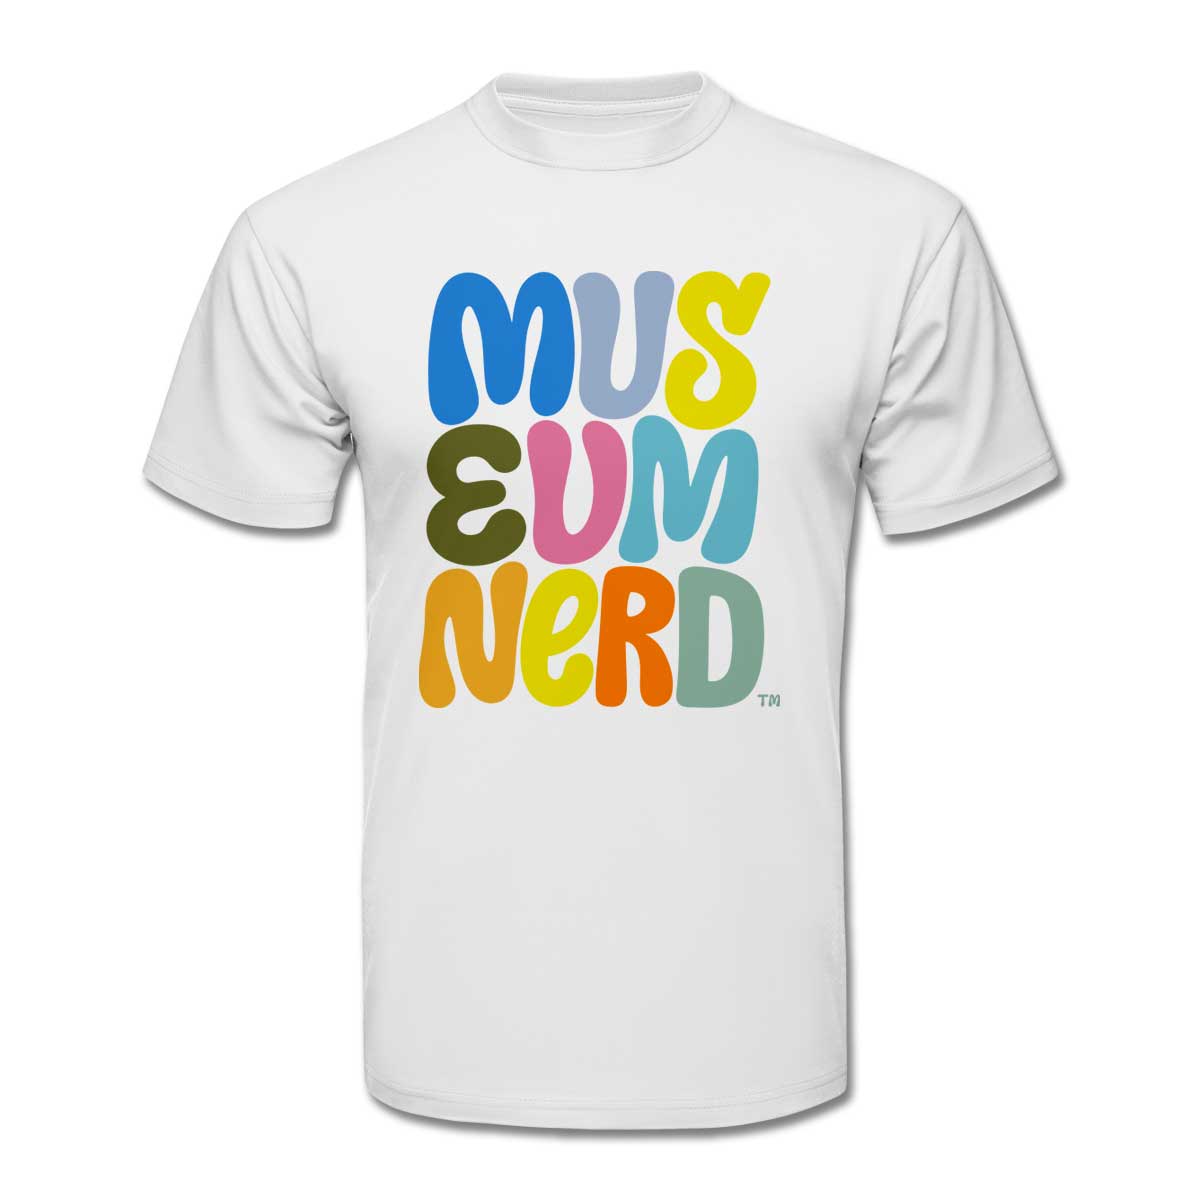 Museum Nerd × Alicia Schultz White T-Shirt